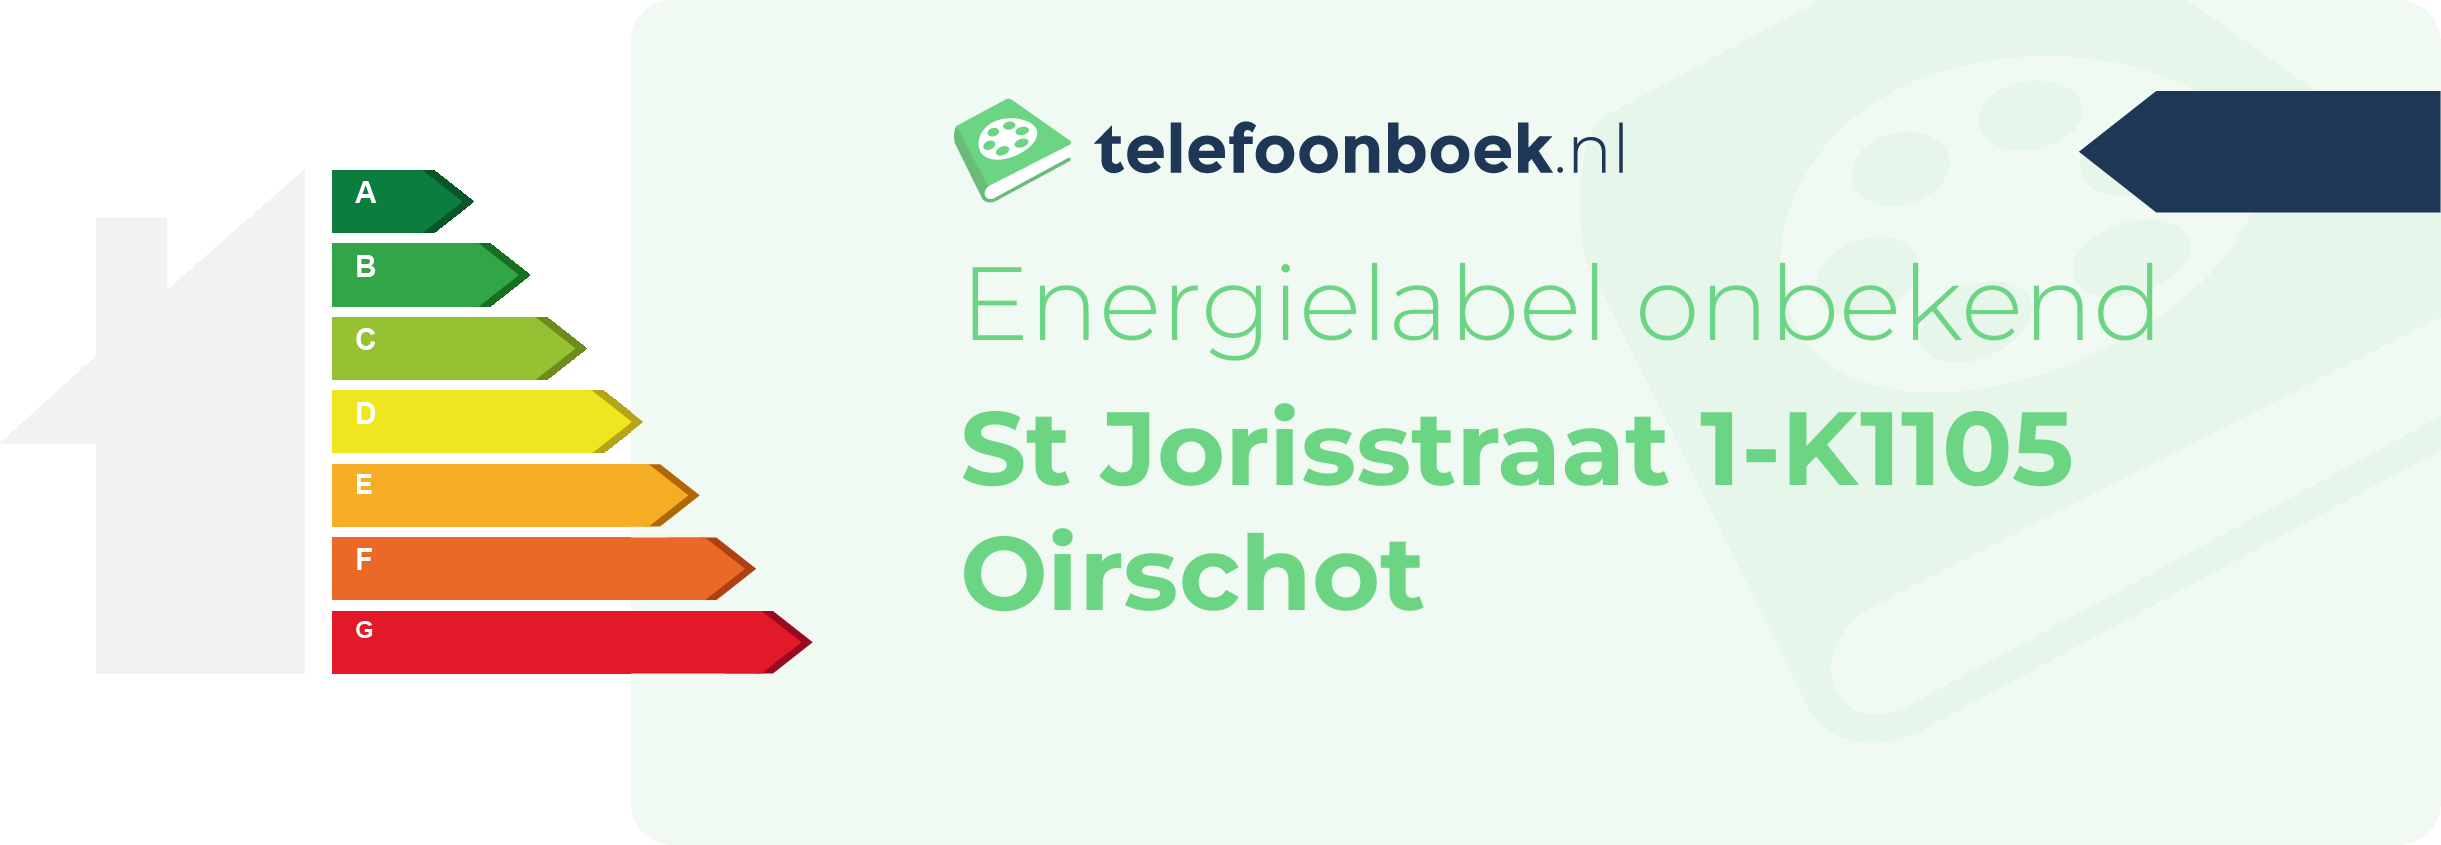 Energielabel St Jorisstraat 1-K1105 Oirschot